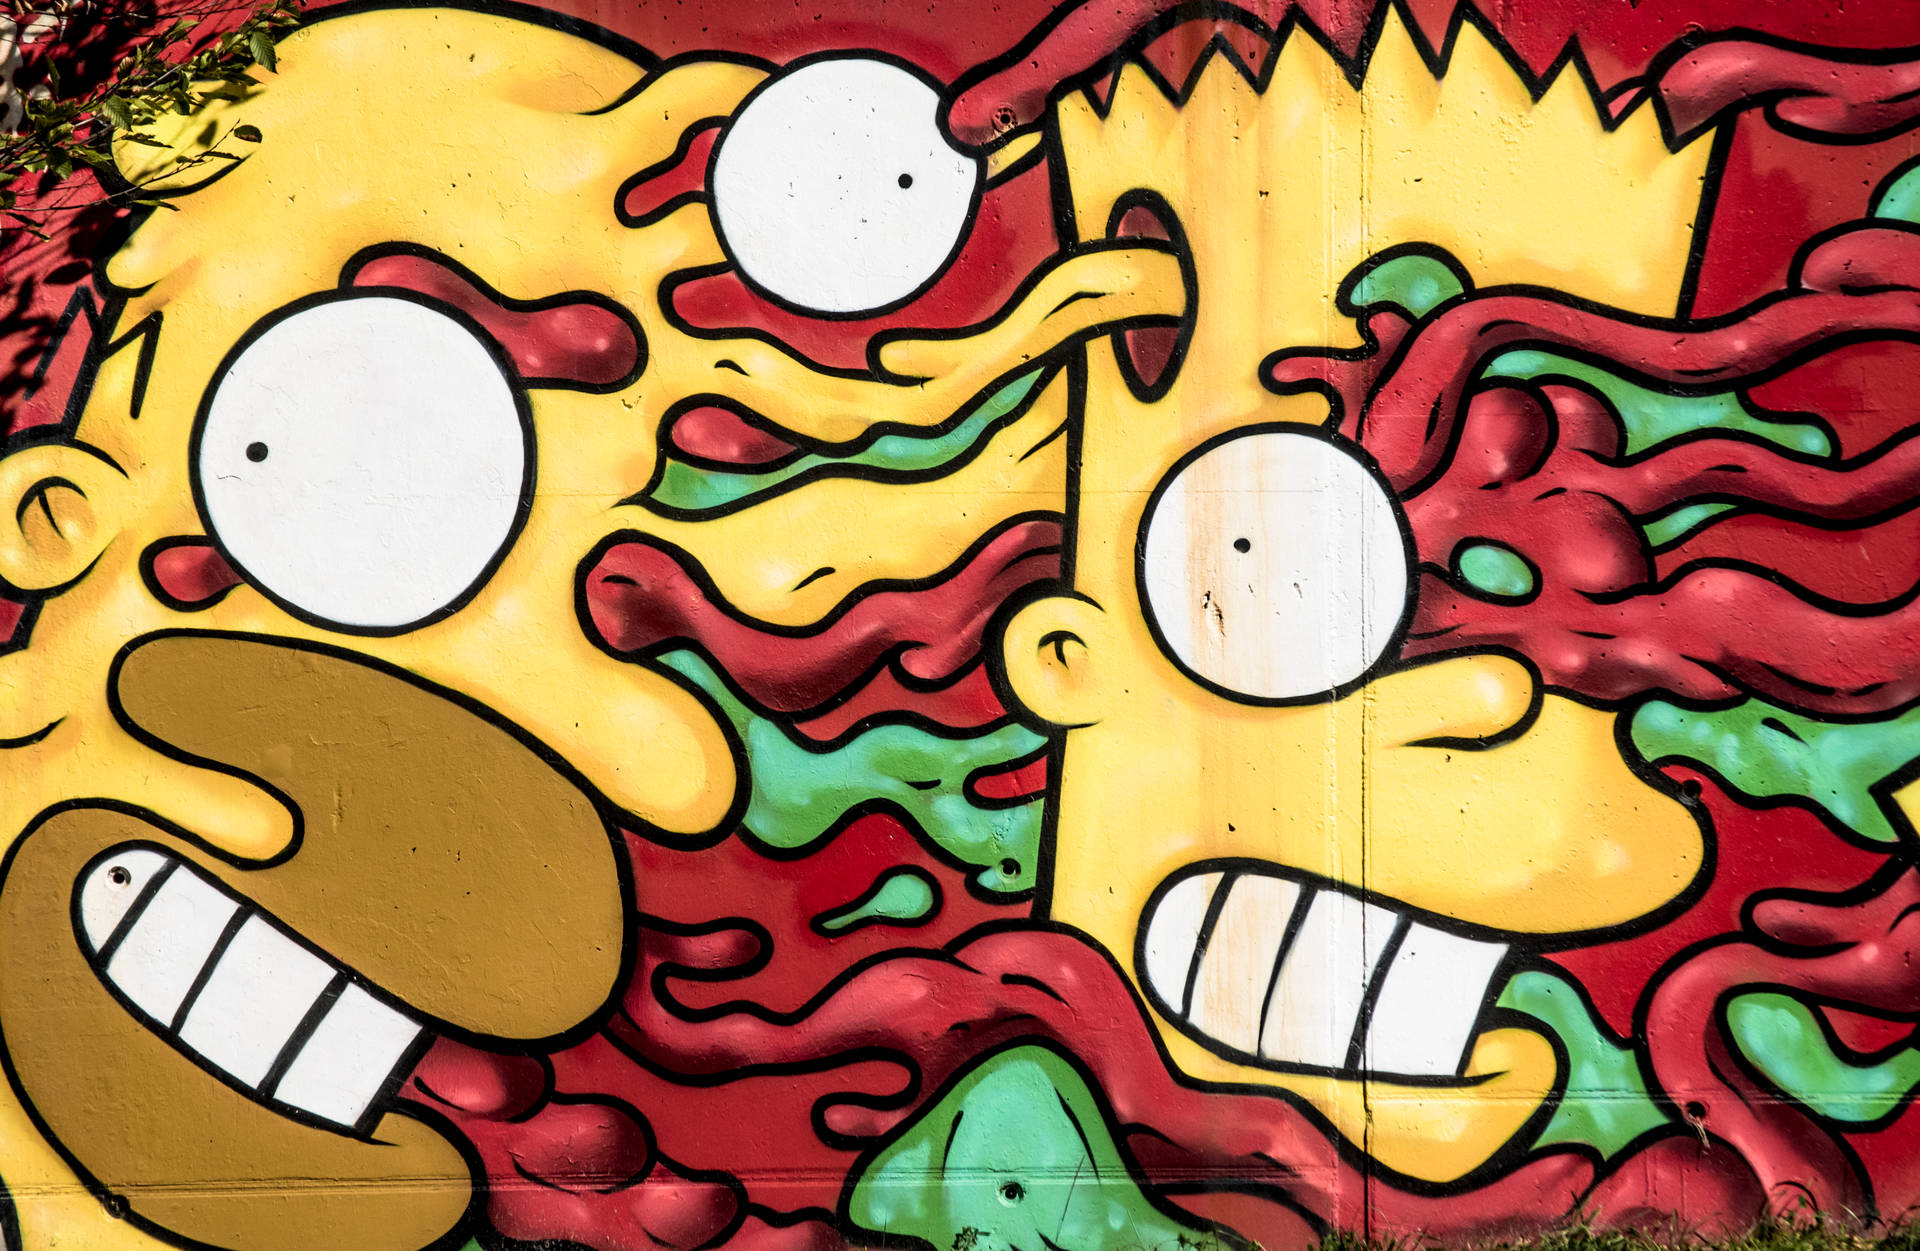 Simpsons Abstract Art Wallpaper